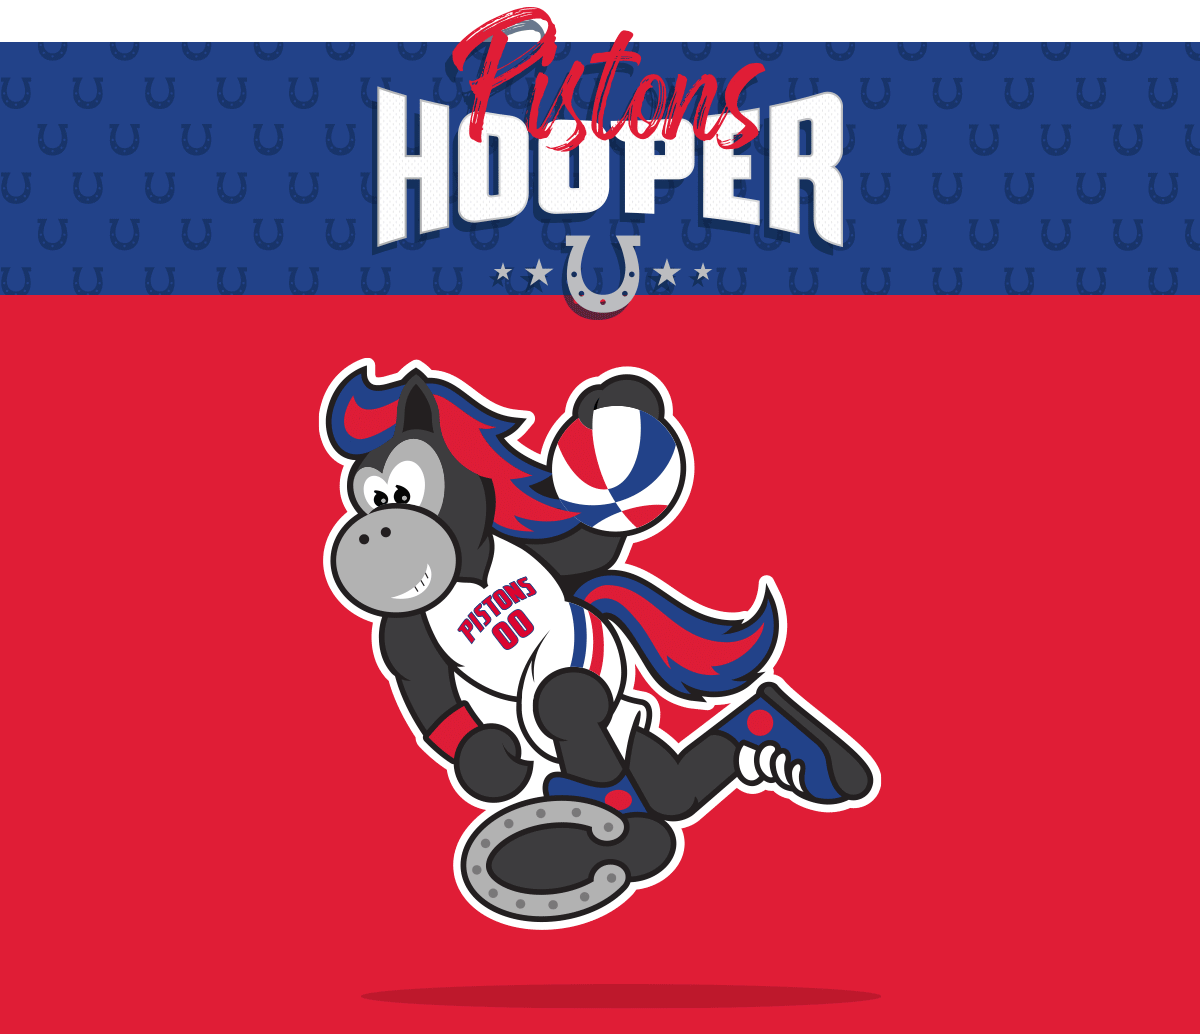 Detroit Pistons Mascot Hooper logo designed by Creative Director Justin Winget